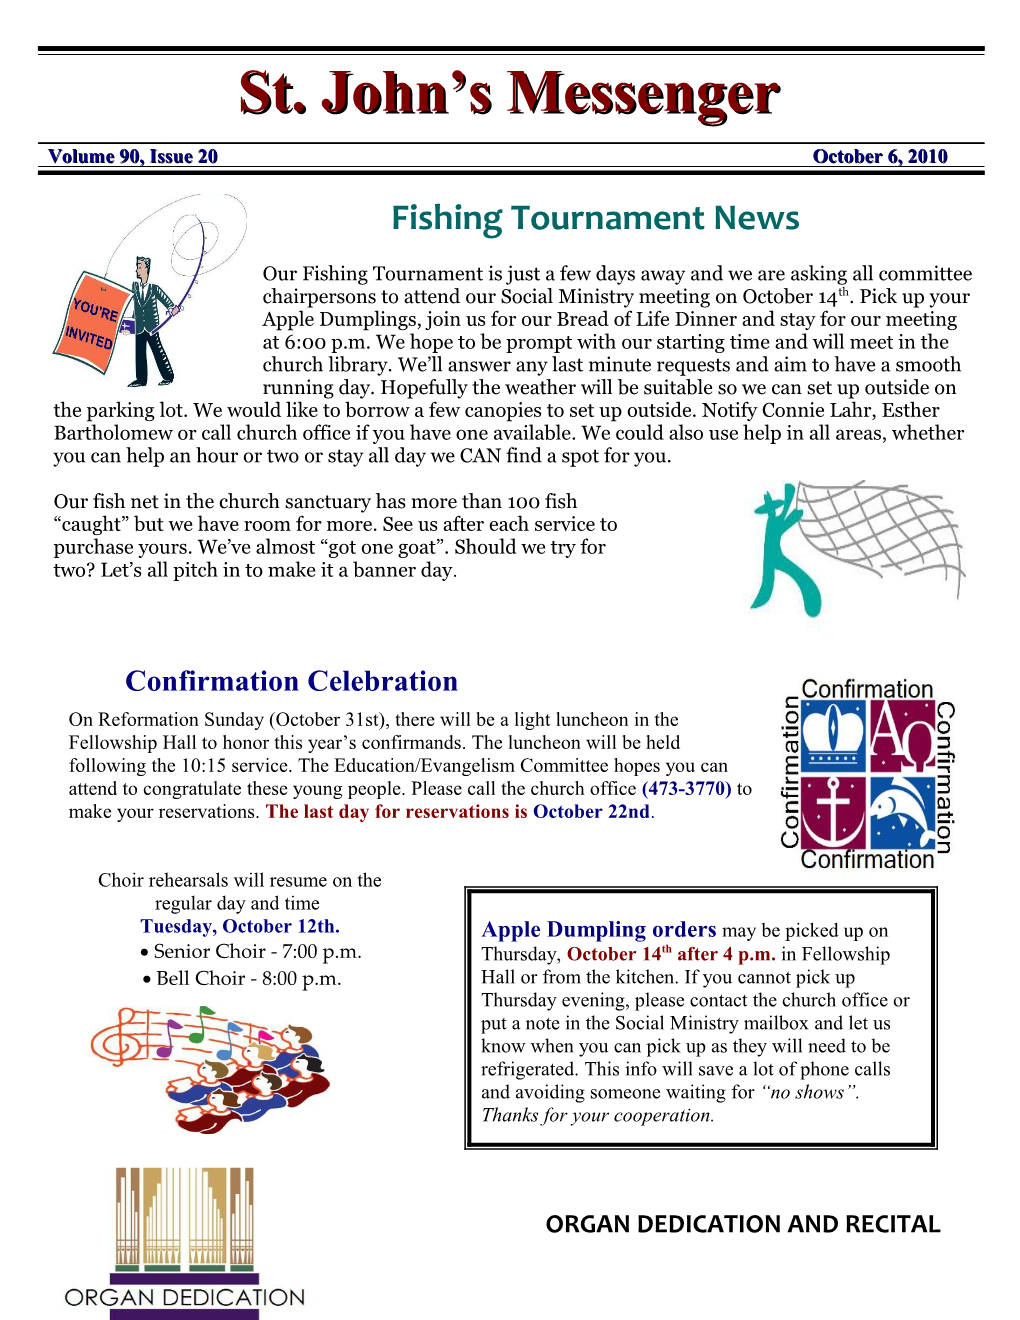 Fishing Tournament News